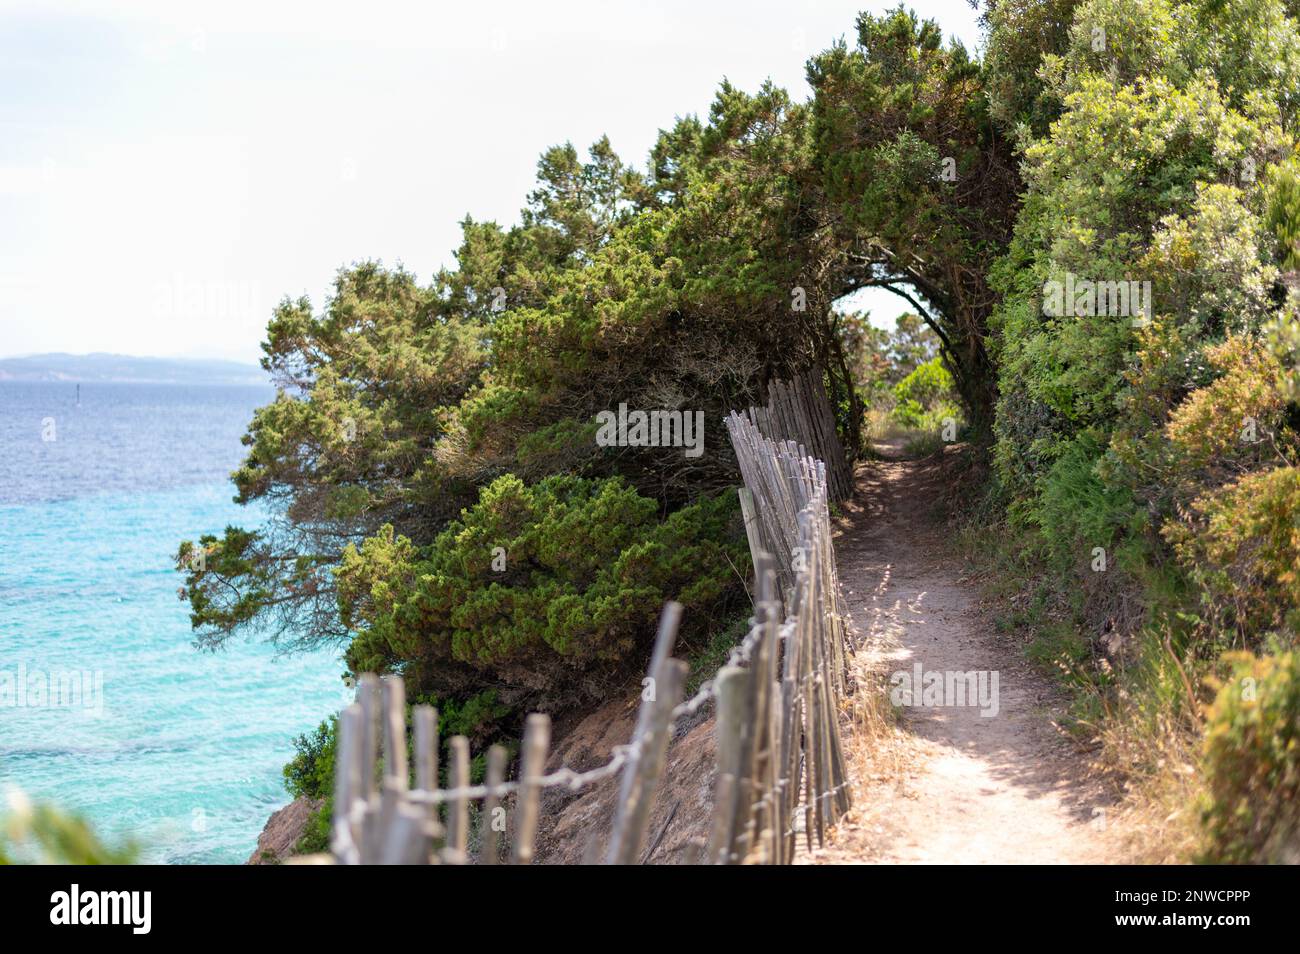 Sentier de promenade en bord de mer, pont naturel végétal, chemin de terre Stock Photo